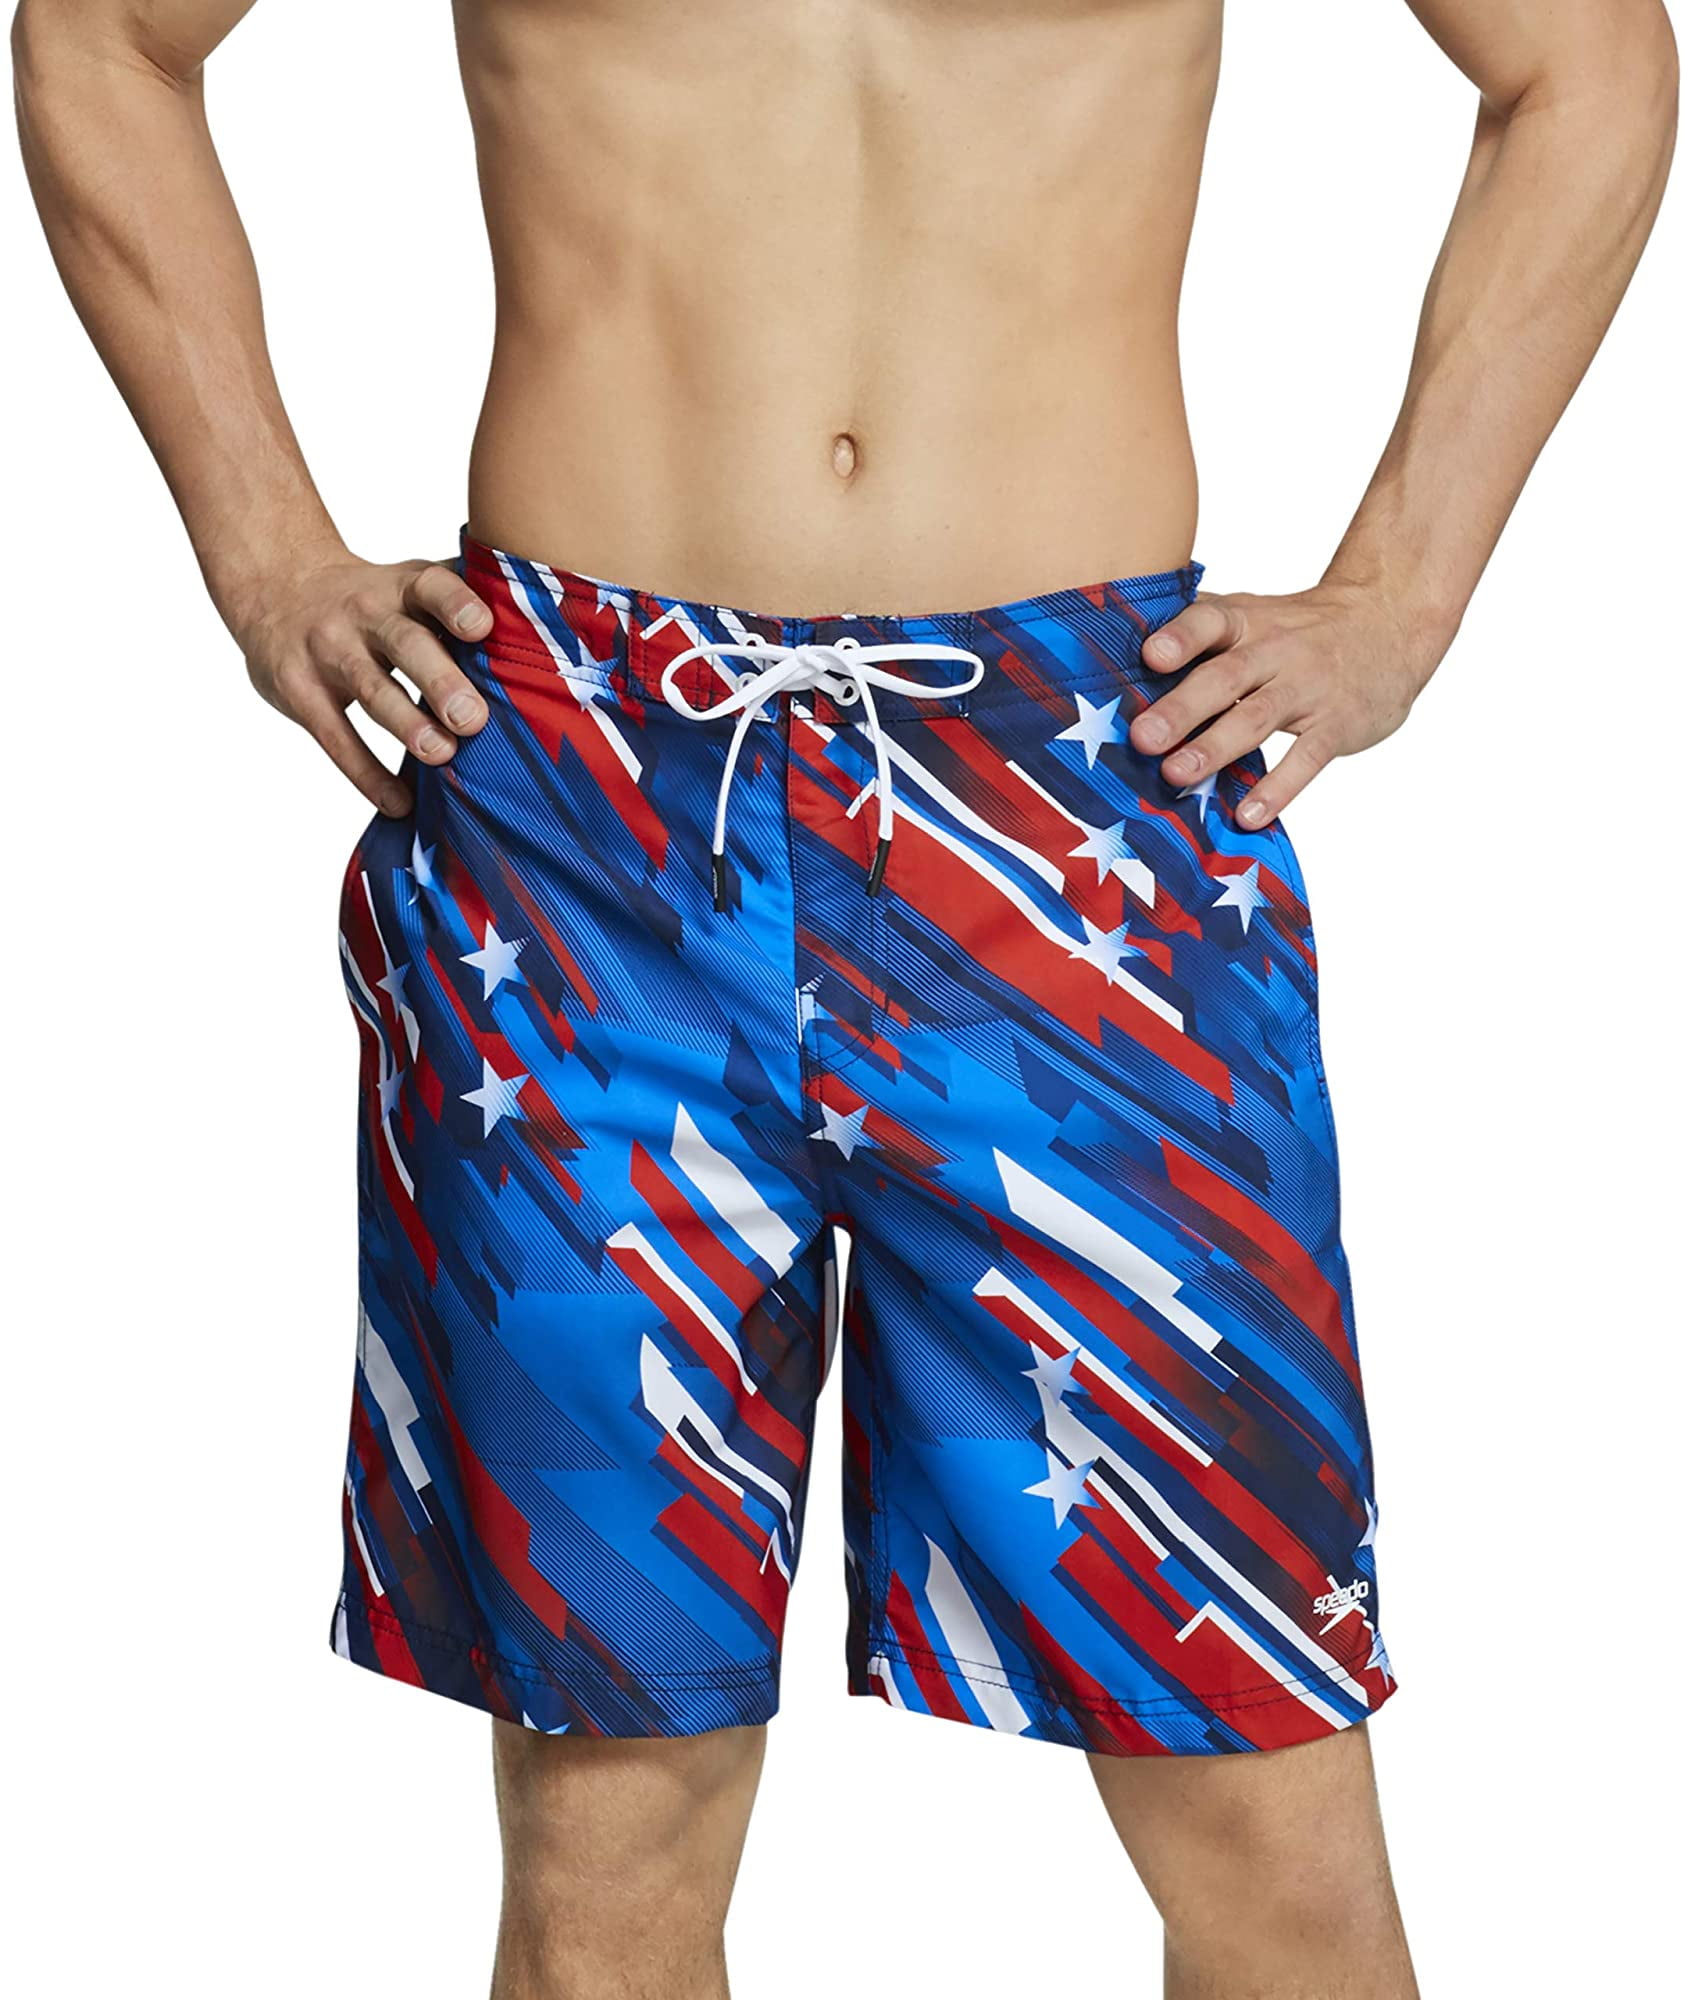 Speedo Mens Swim Trunk Knee Length Boardshort Bondi Printed